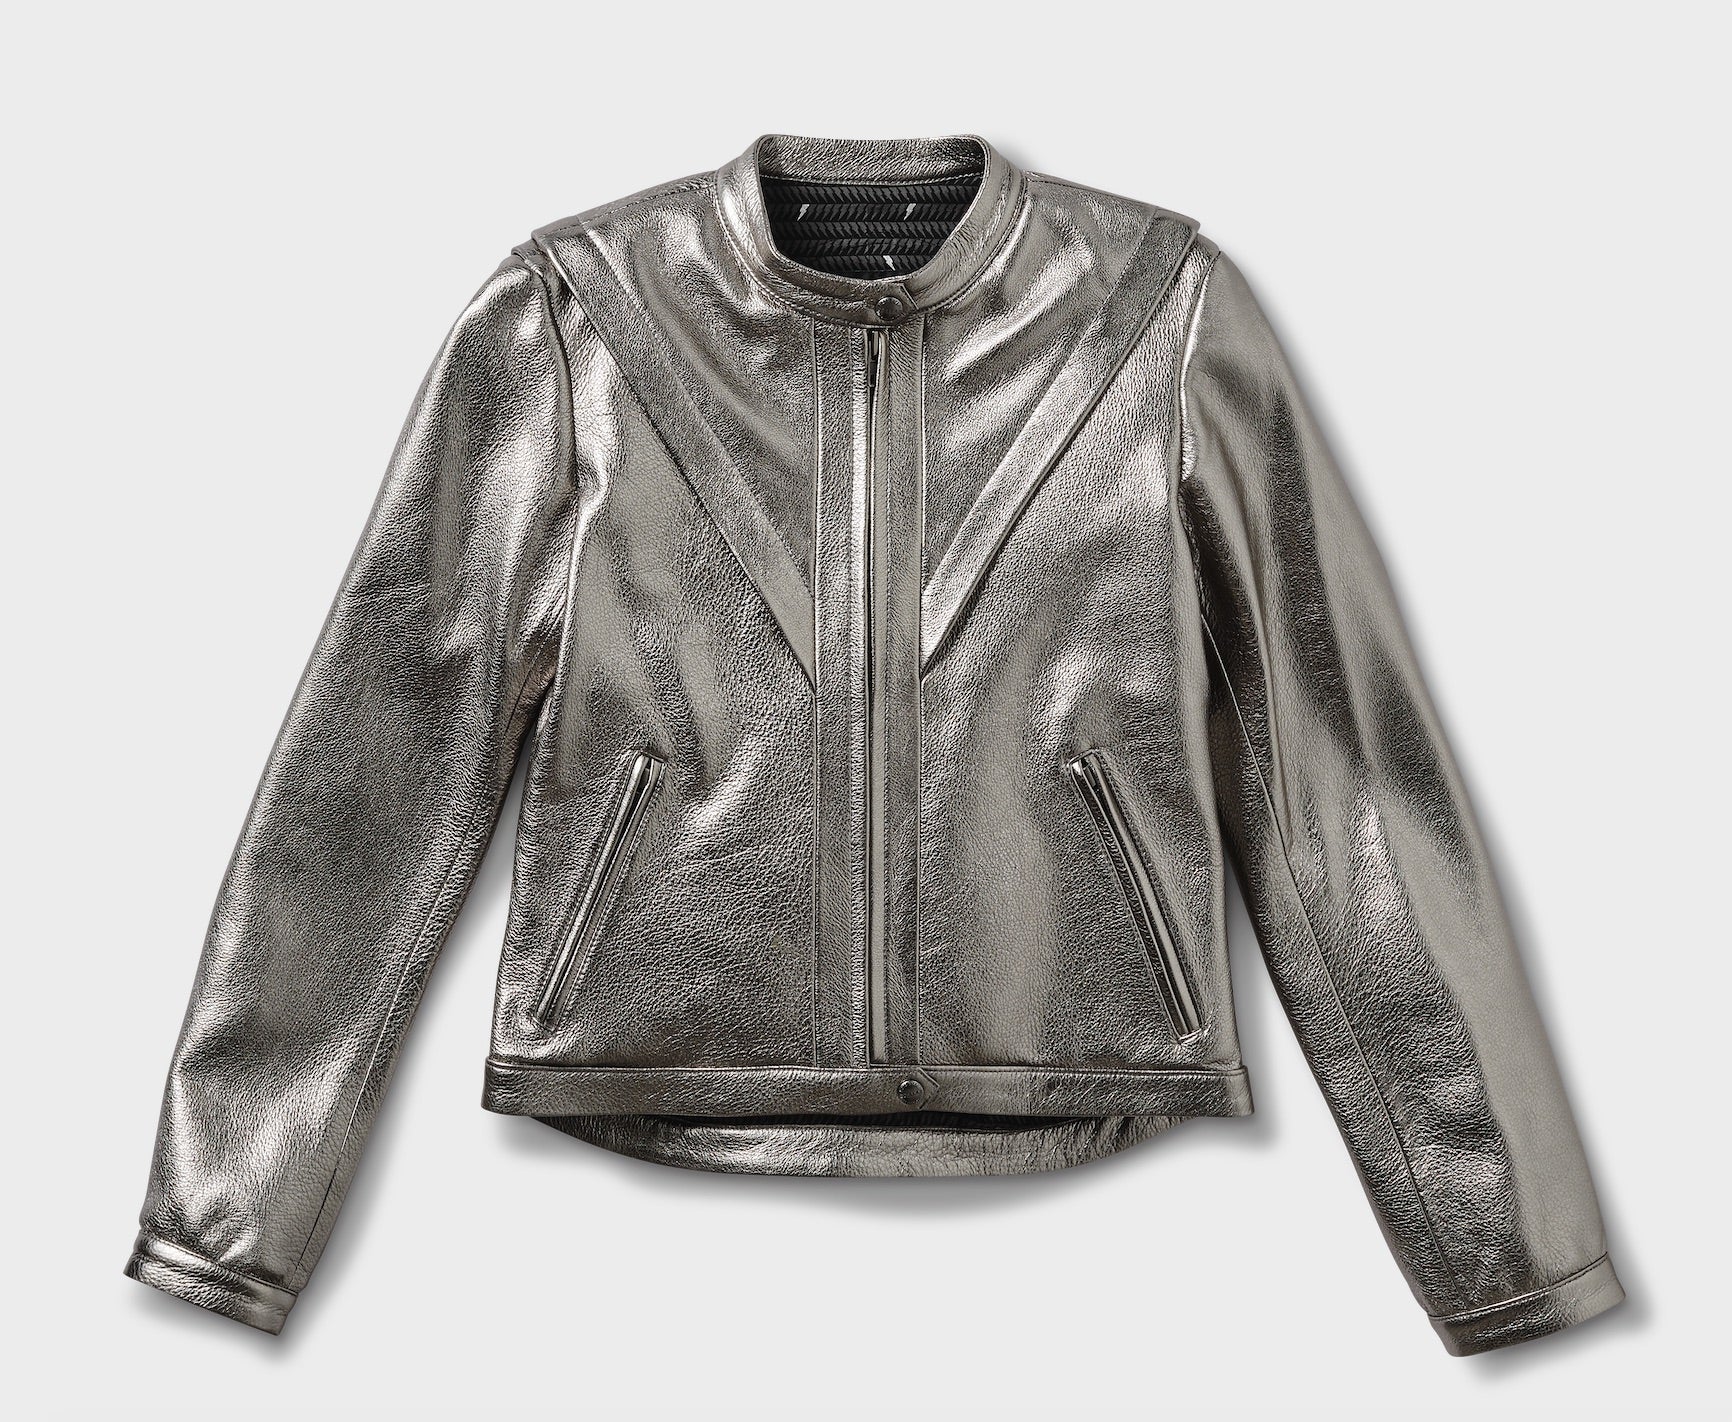 STARFIELD MX Armored Leather Jacket BLACK/WHITE – STELLAR Moto Brand